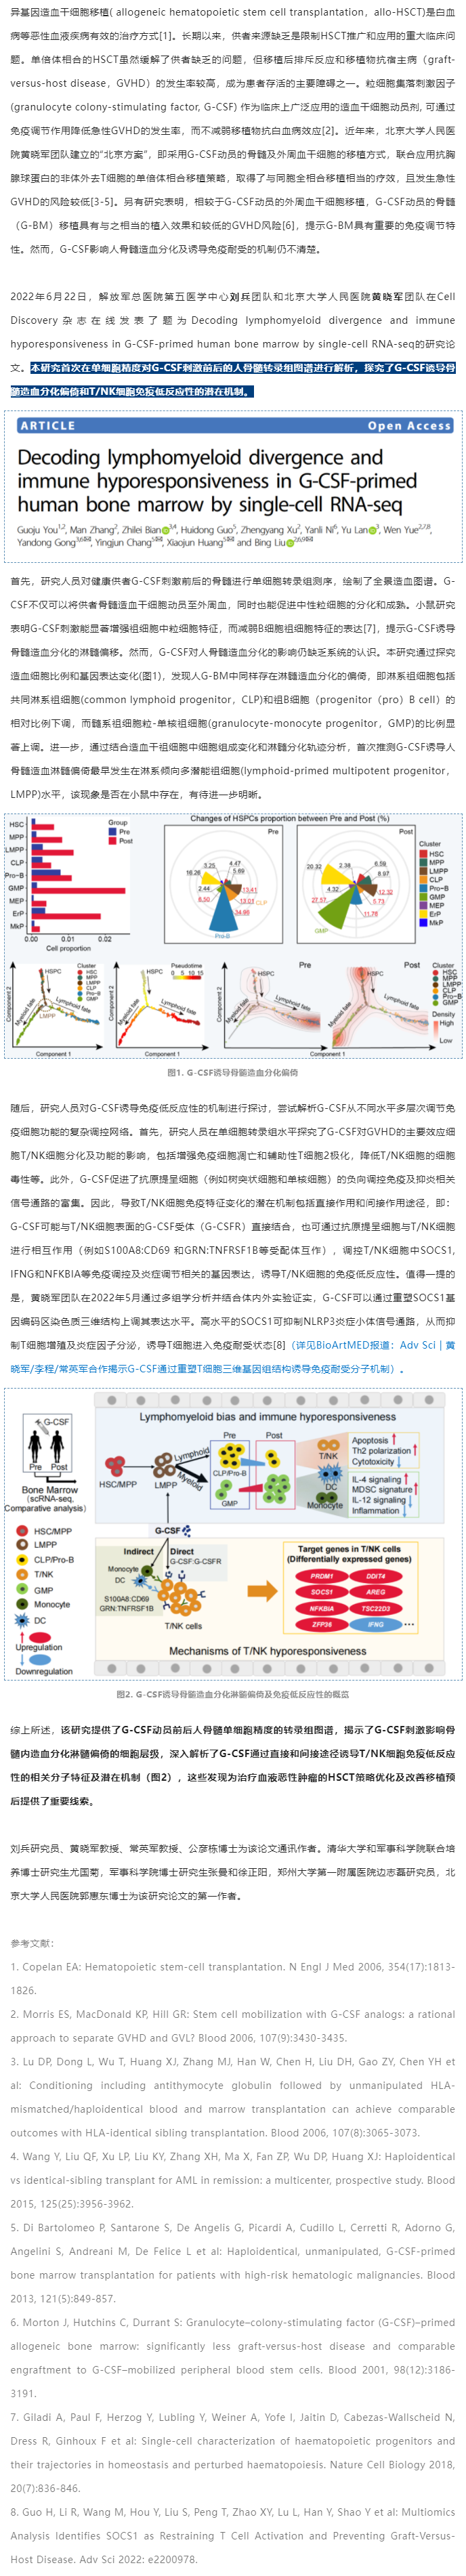 Cell Discovery _ 刘兵_黄晓军团队合作解析 G -CSF 诱导人骨髓造血淋髓偏倚和免疫低反